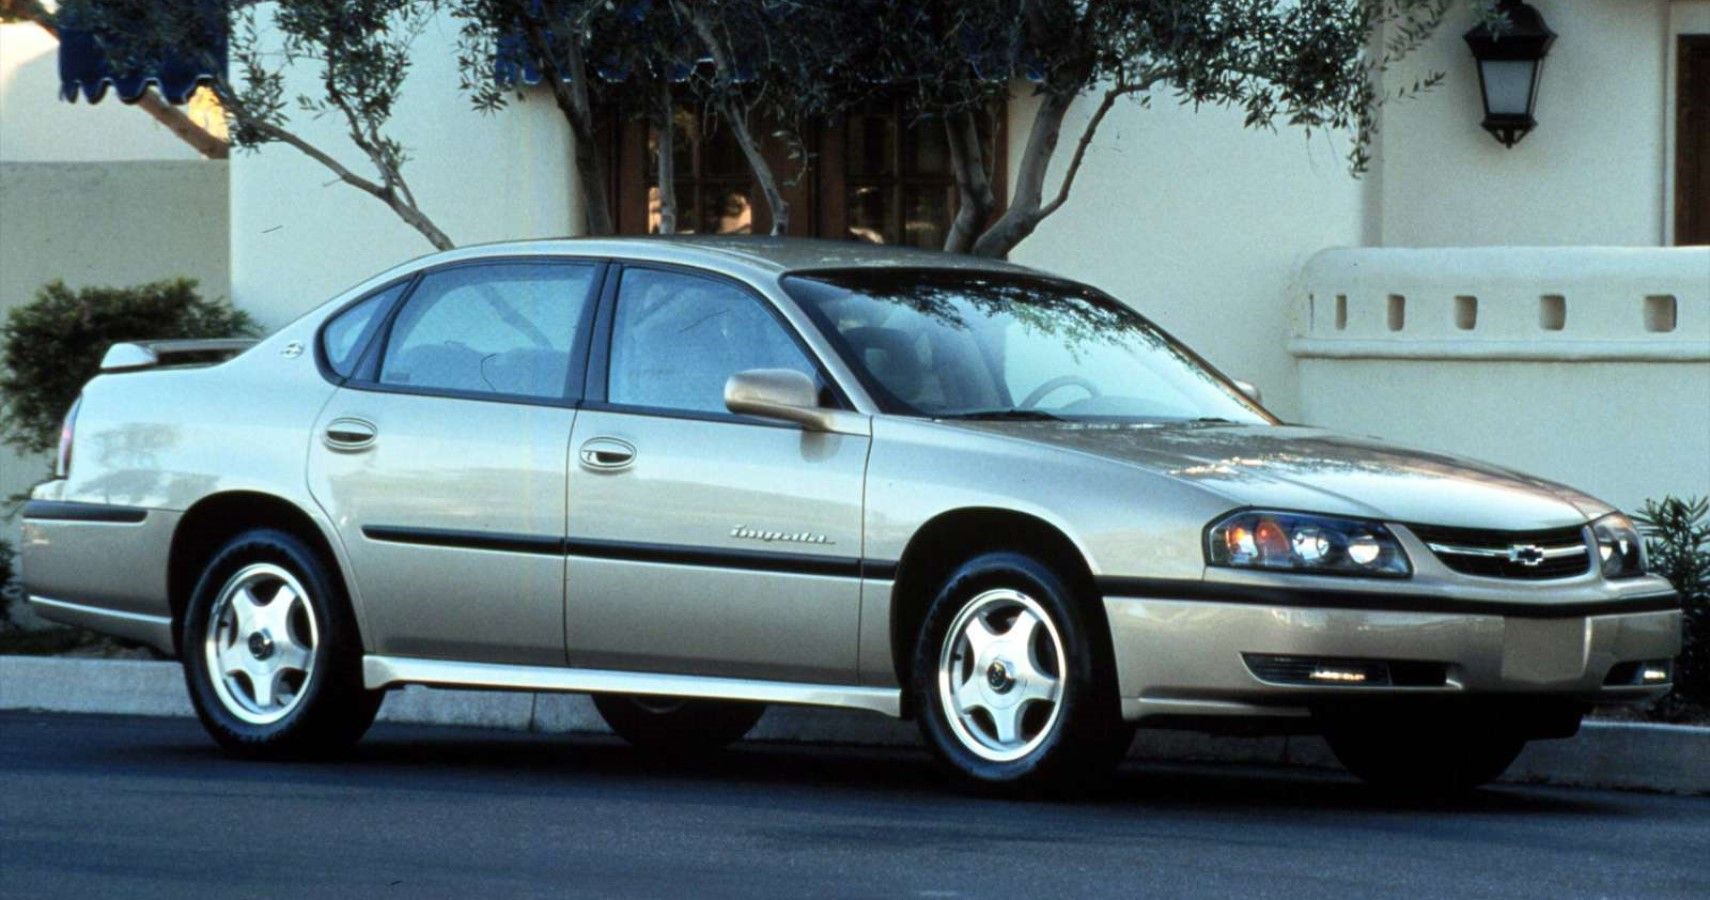 2000 Chevy Impala front third quarter view